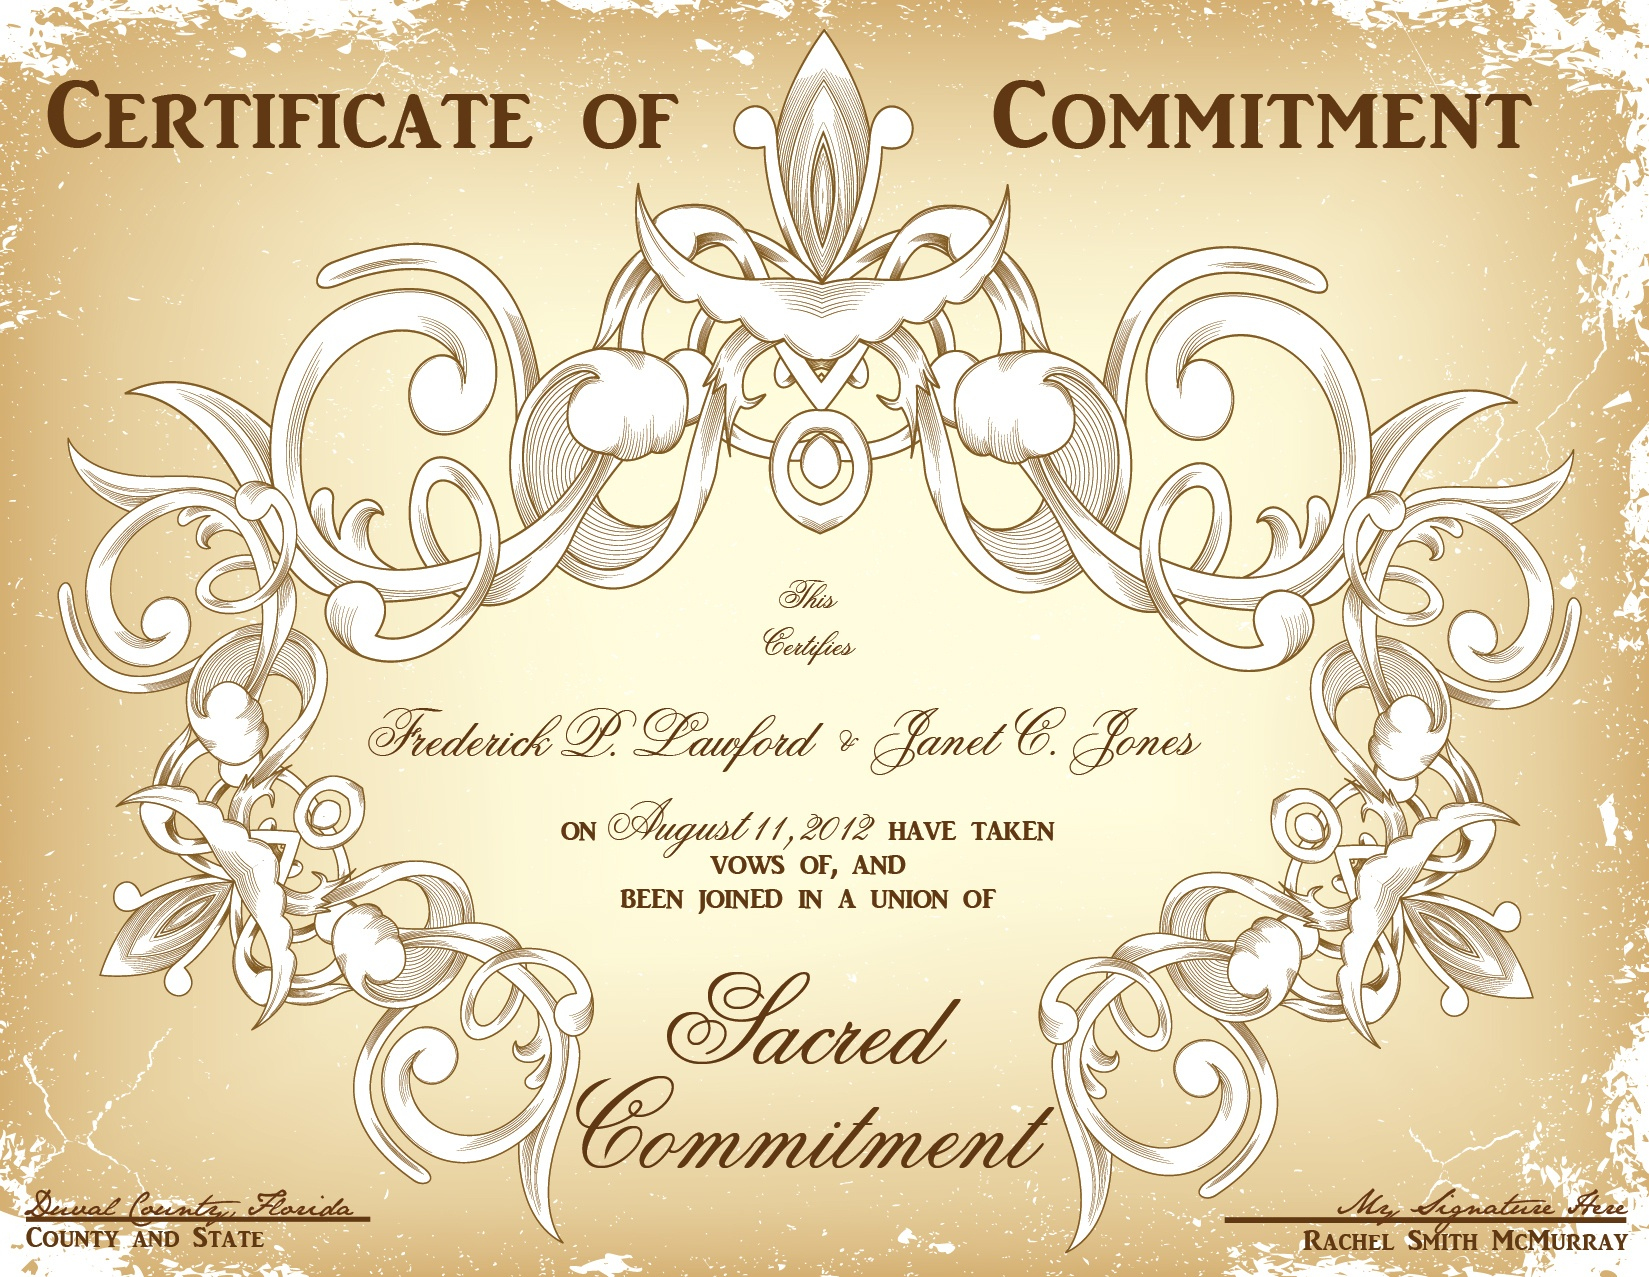 Commitment Certificate Free Printable Free Printable